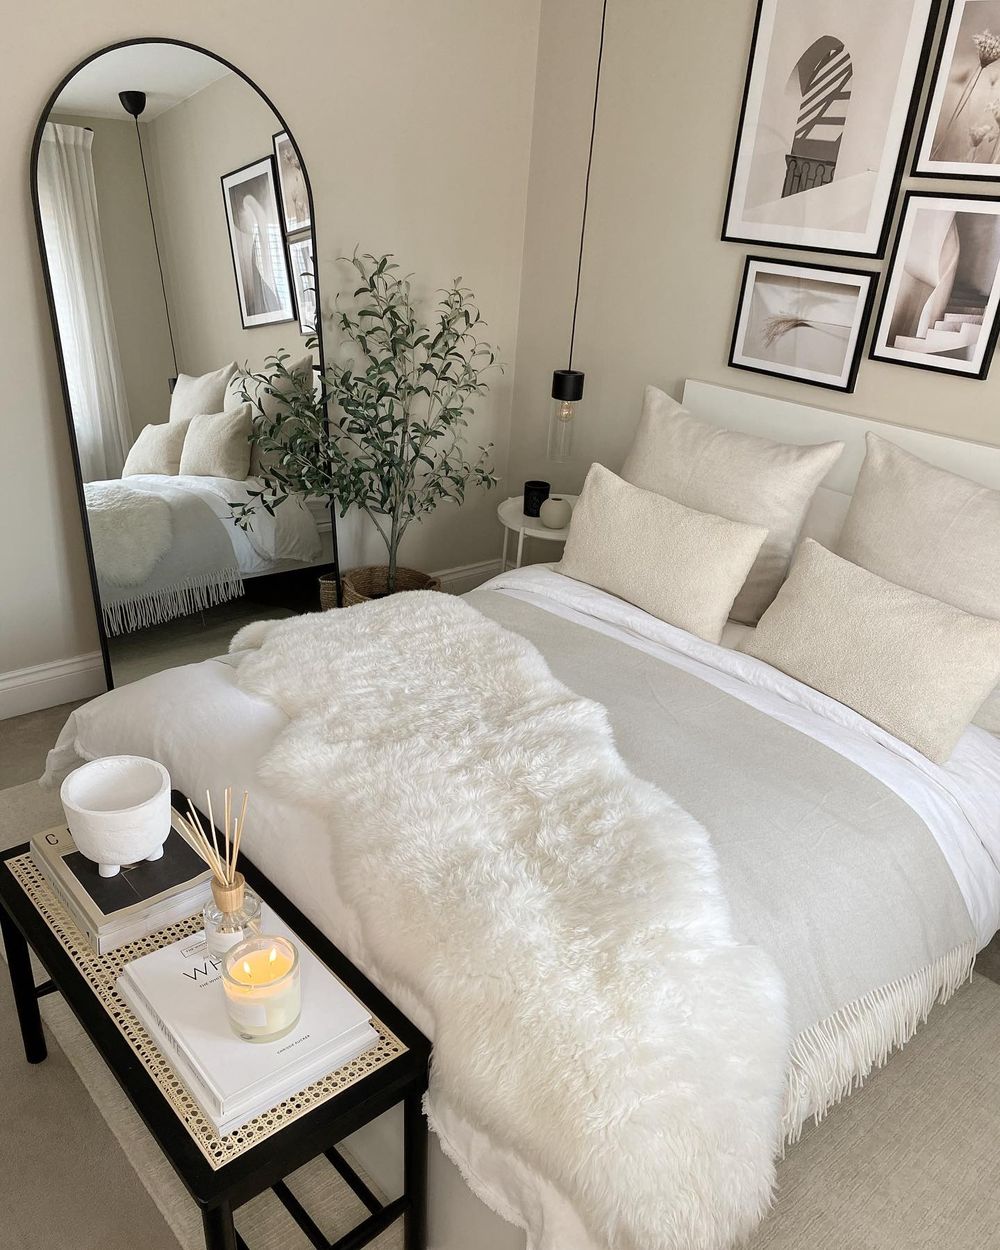 How to decorate bed decor ideas @throughthegreydoor